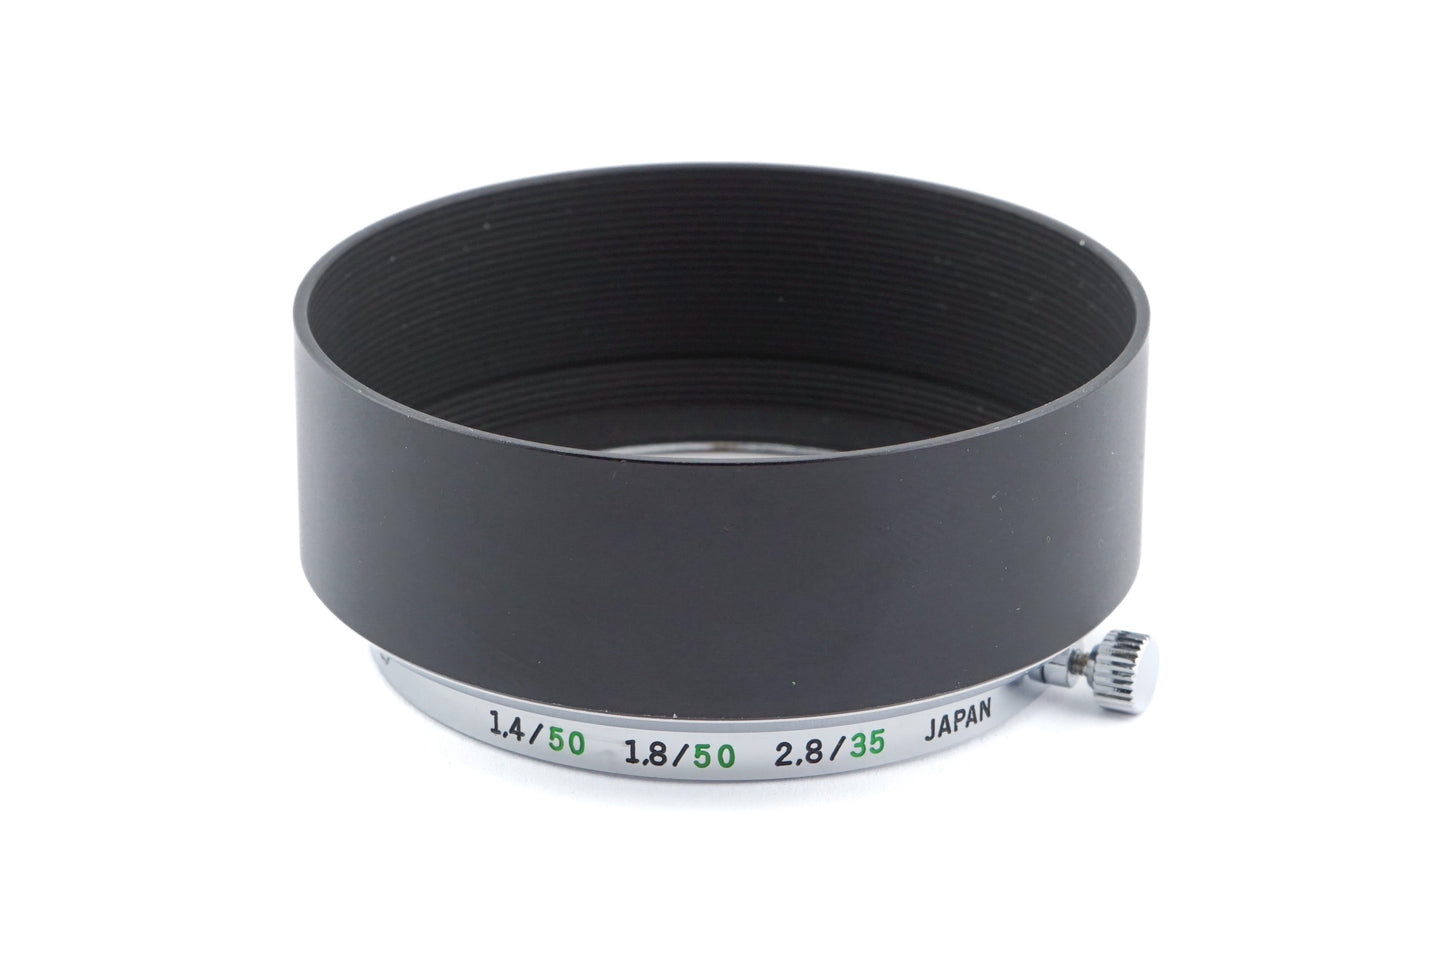 Olympus Metal Lens Hood for 50mm f1.4/50mm f1.8/35mm f2.8 - Accessory